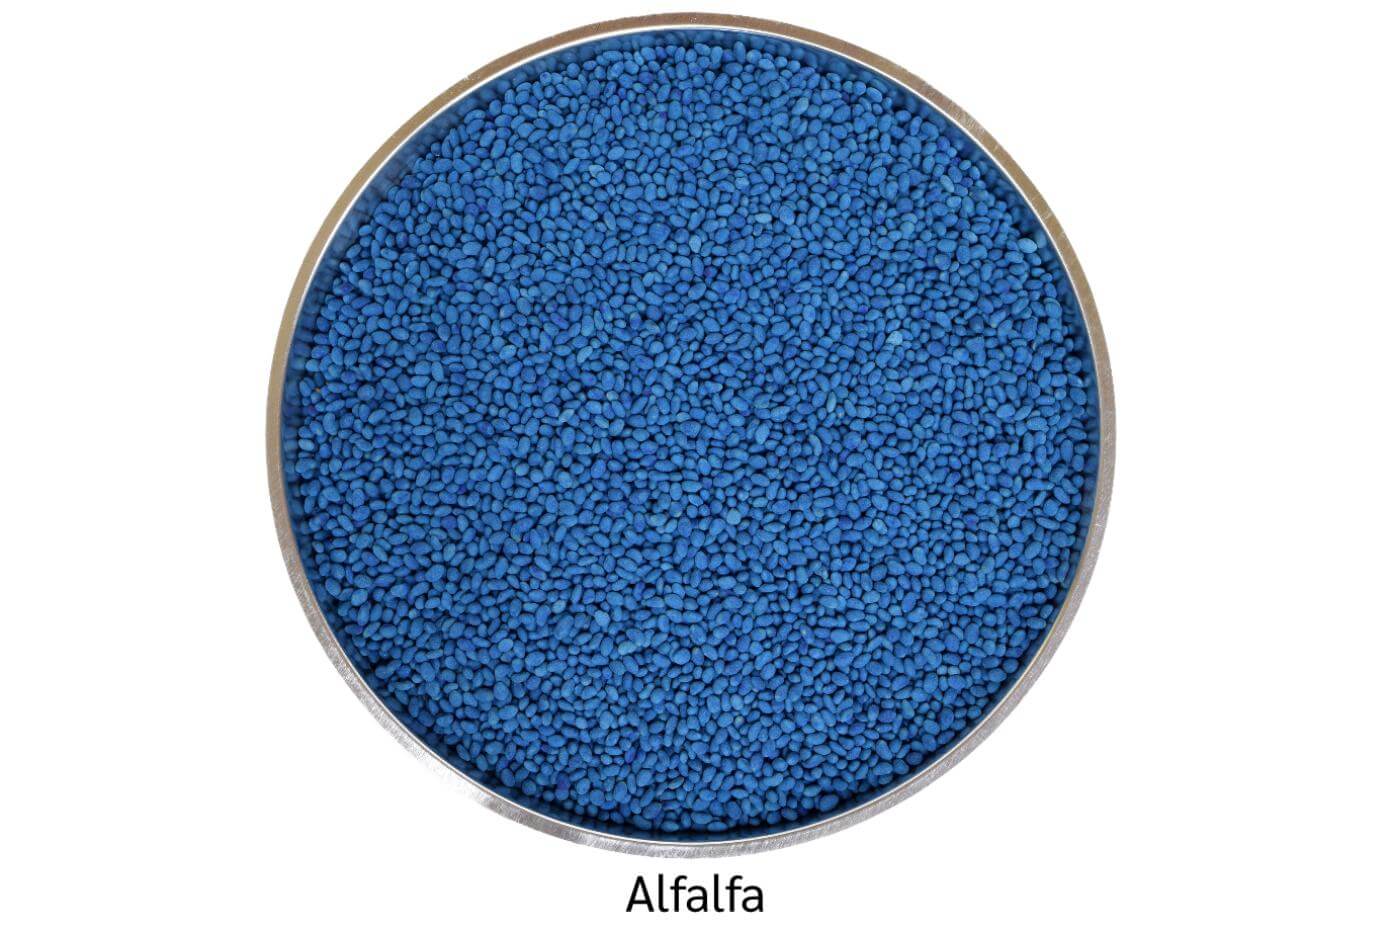 Coated alfalfa seed